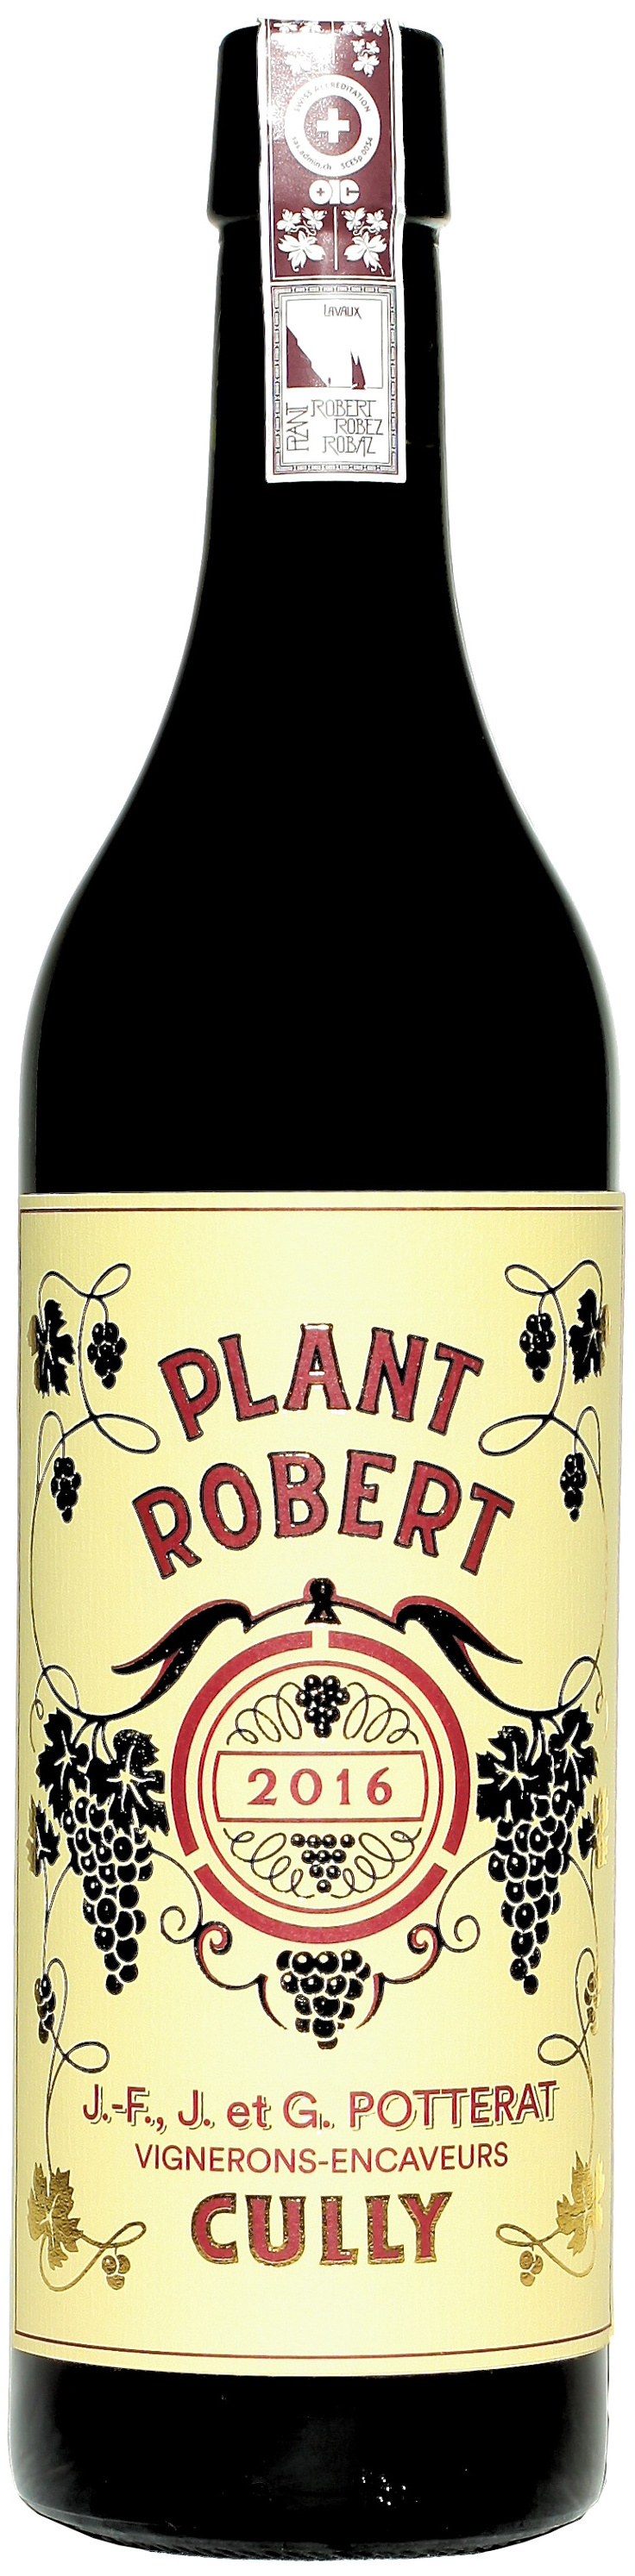 Plant Robert - J.-F., J. et G. Potterat